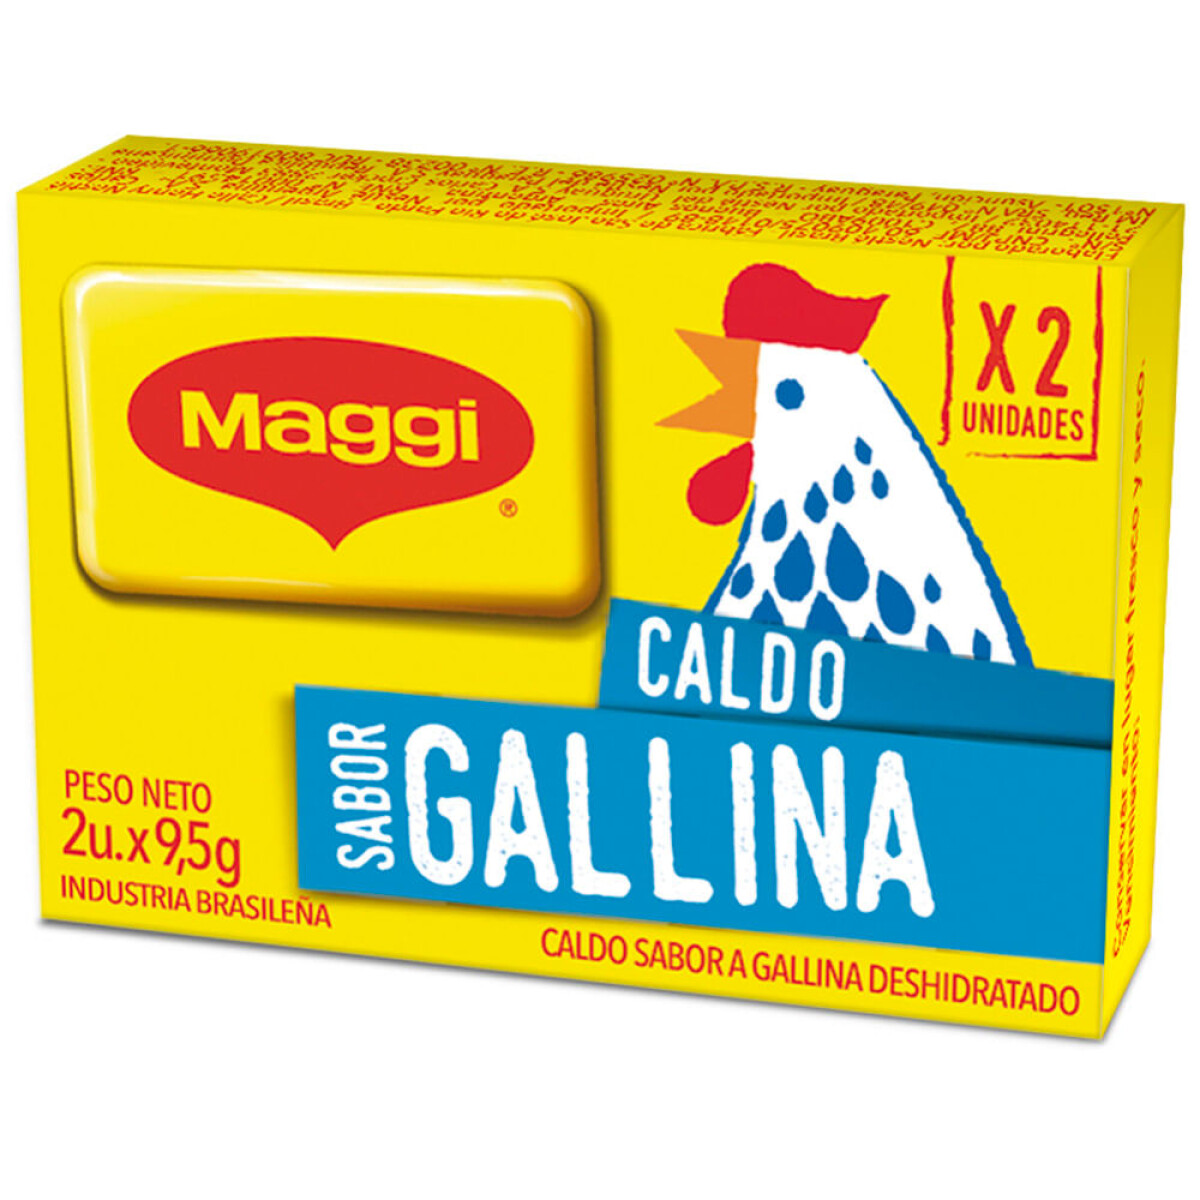 CALDO DE GALLINA MAGGI X 2 